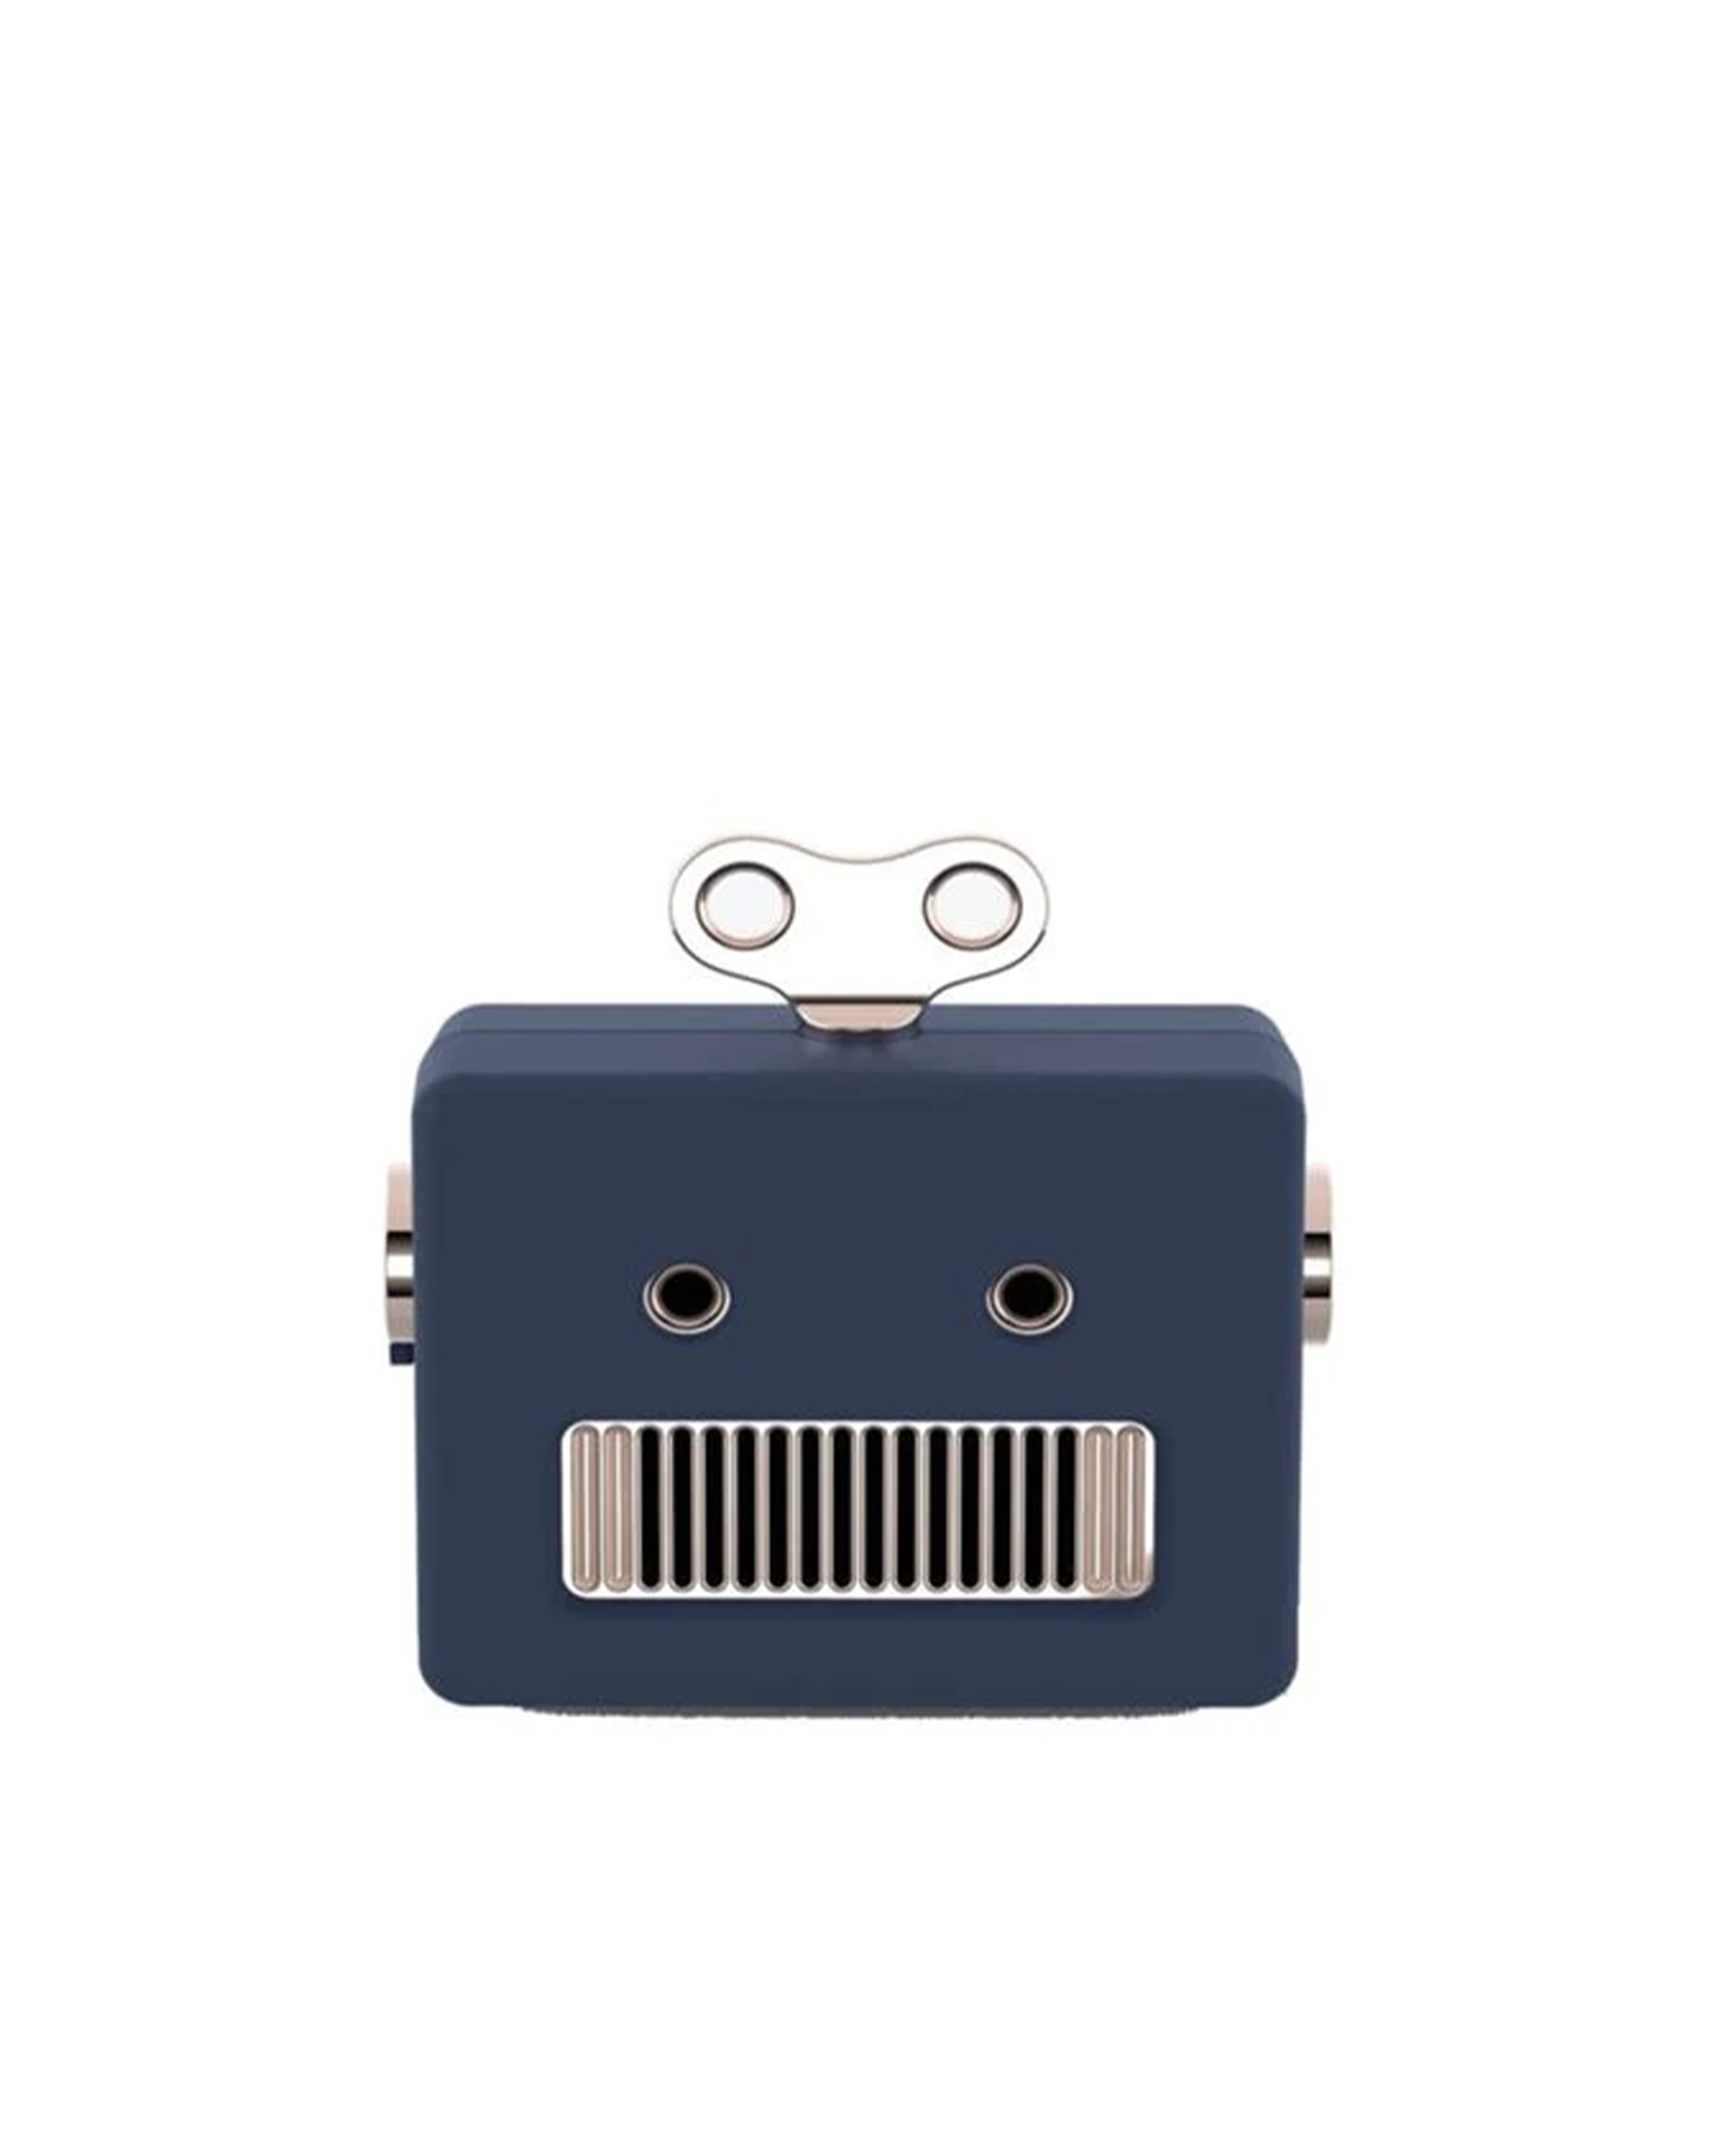 Shop Qushini Speaker Robot Blue Wireless